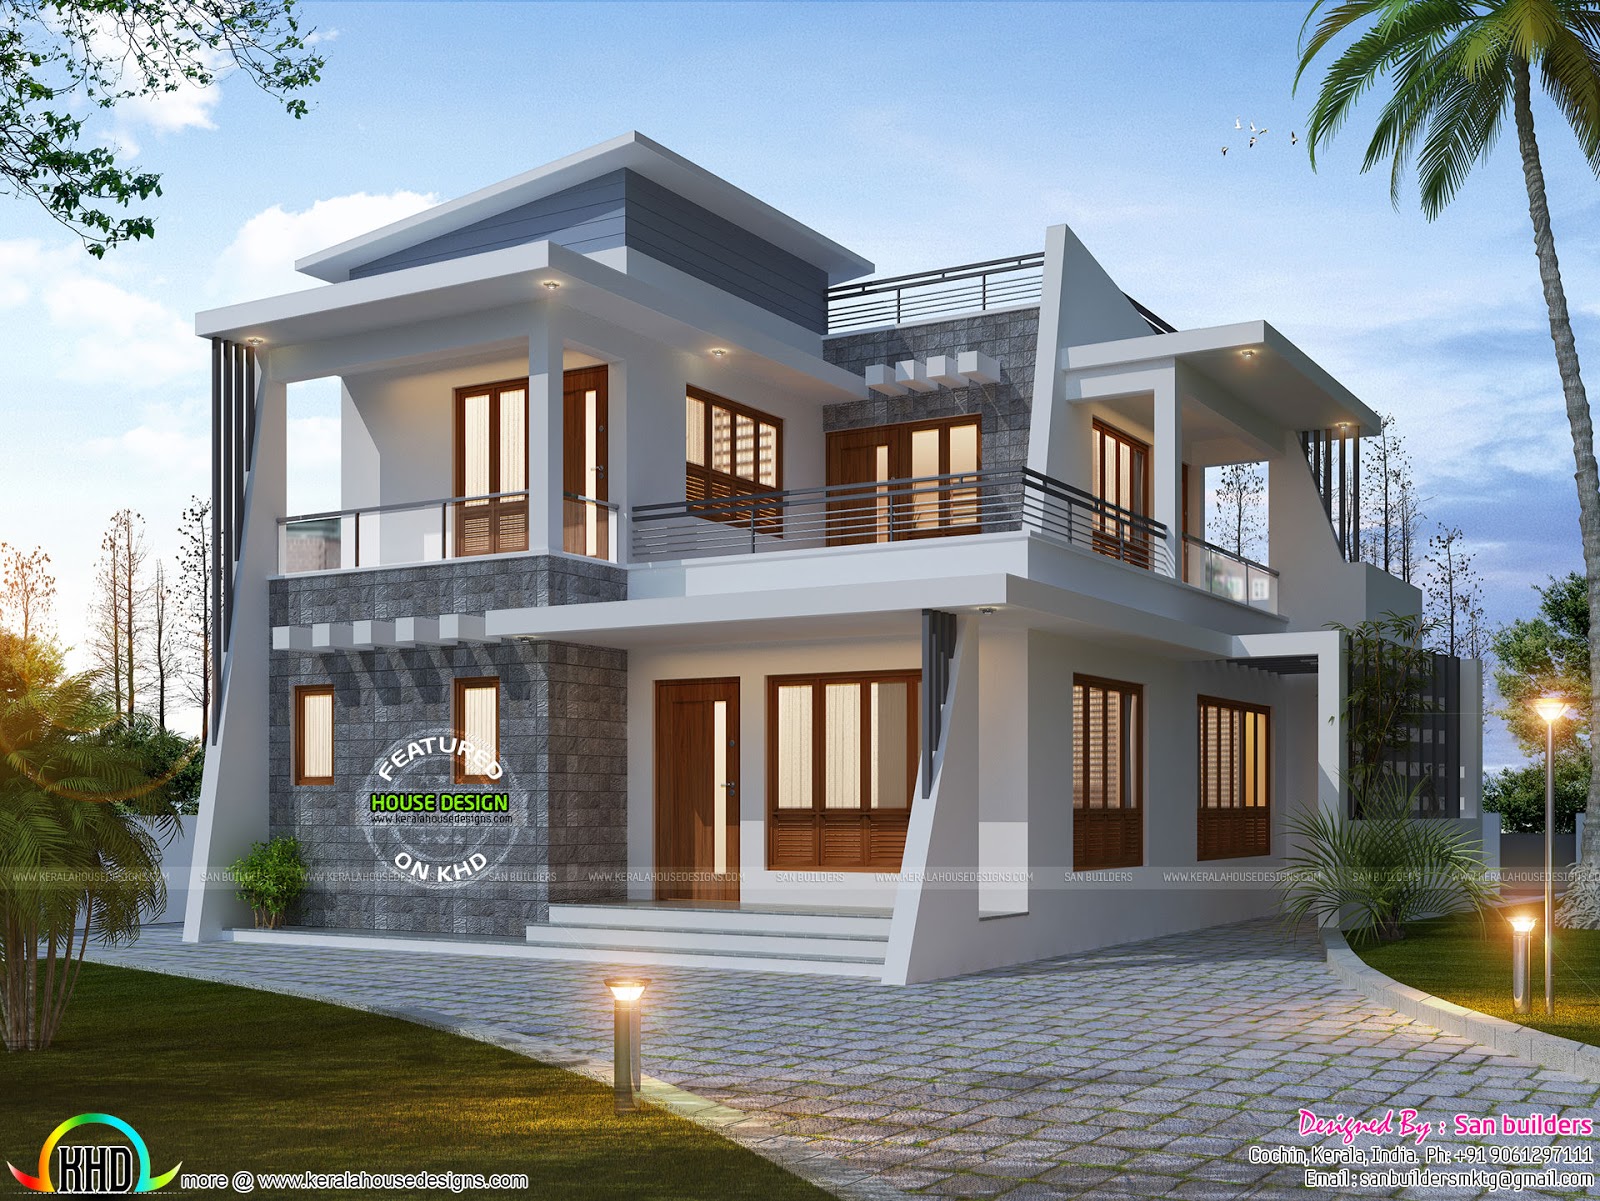 4 bedroom modern  home  1885 sq ft Kerala  home  design  